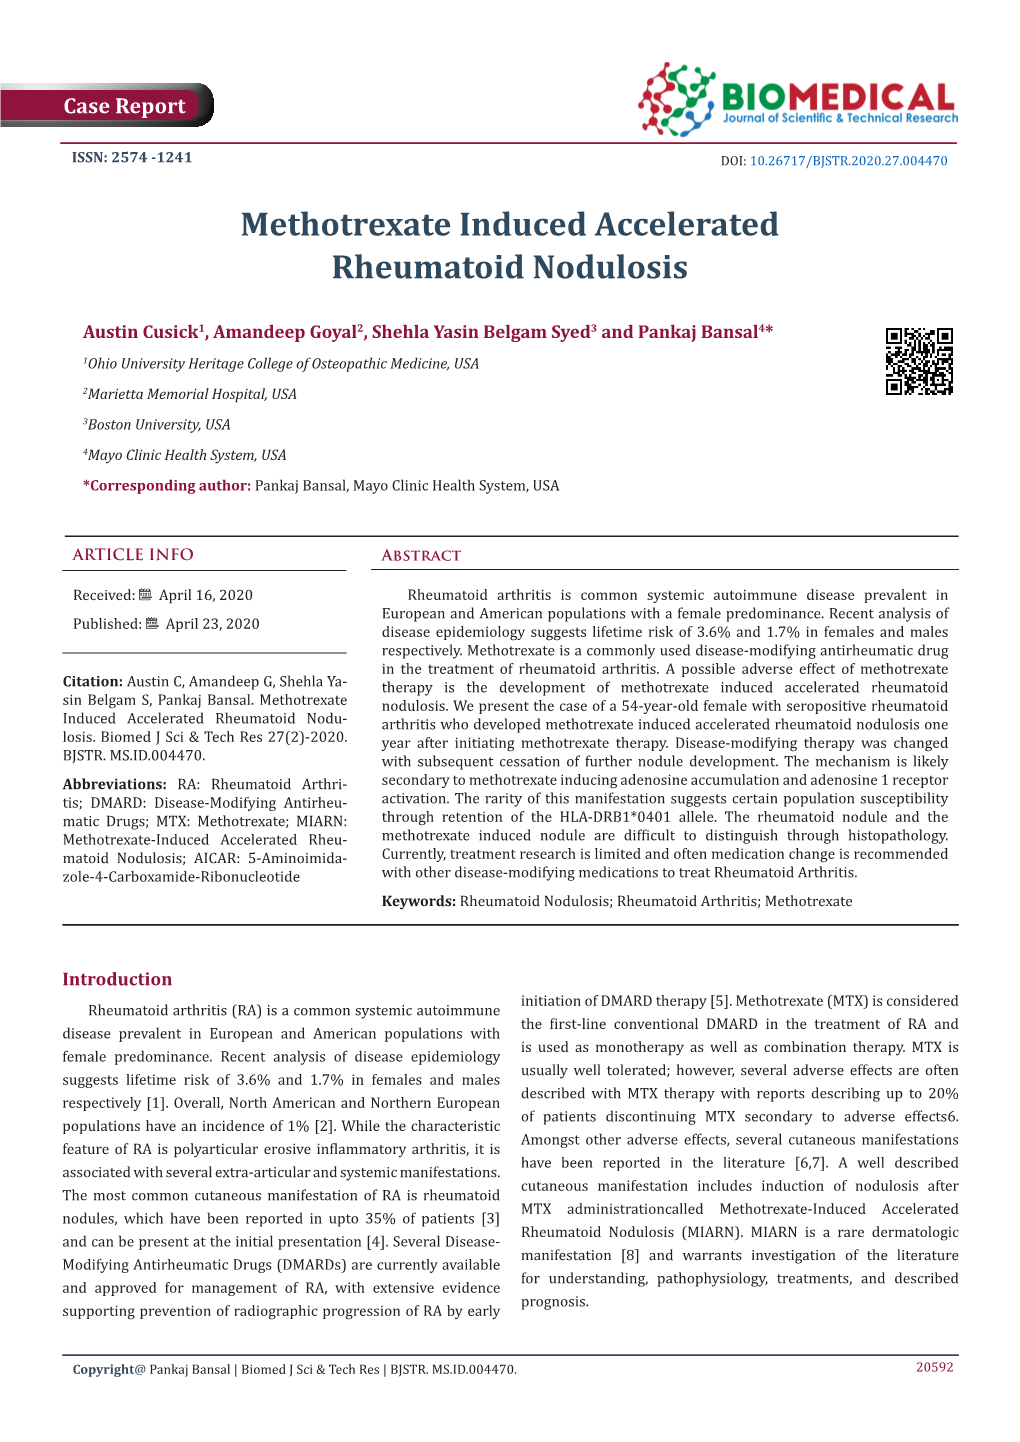 Methotrexate Induced Accelerated Rheumatoid Nodulosis